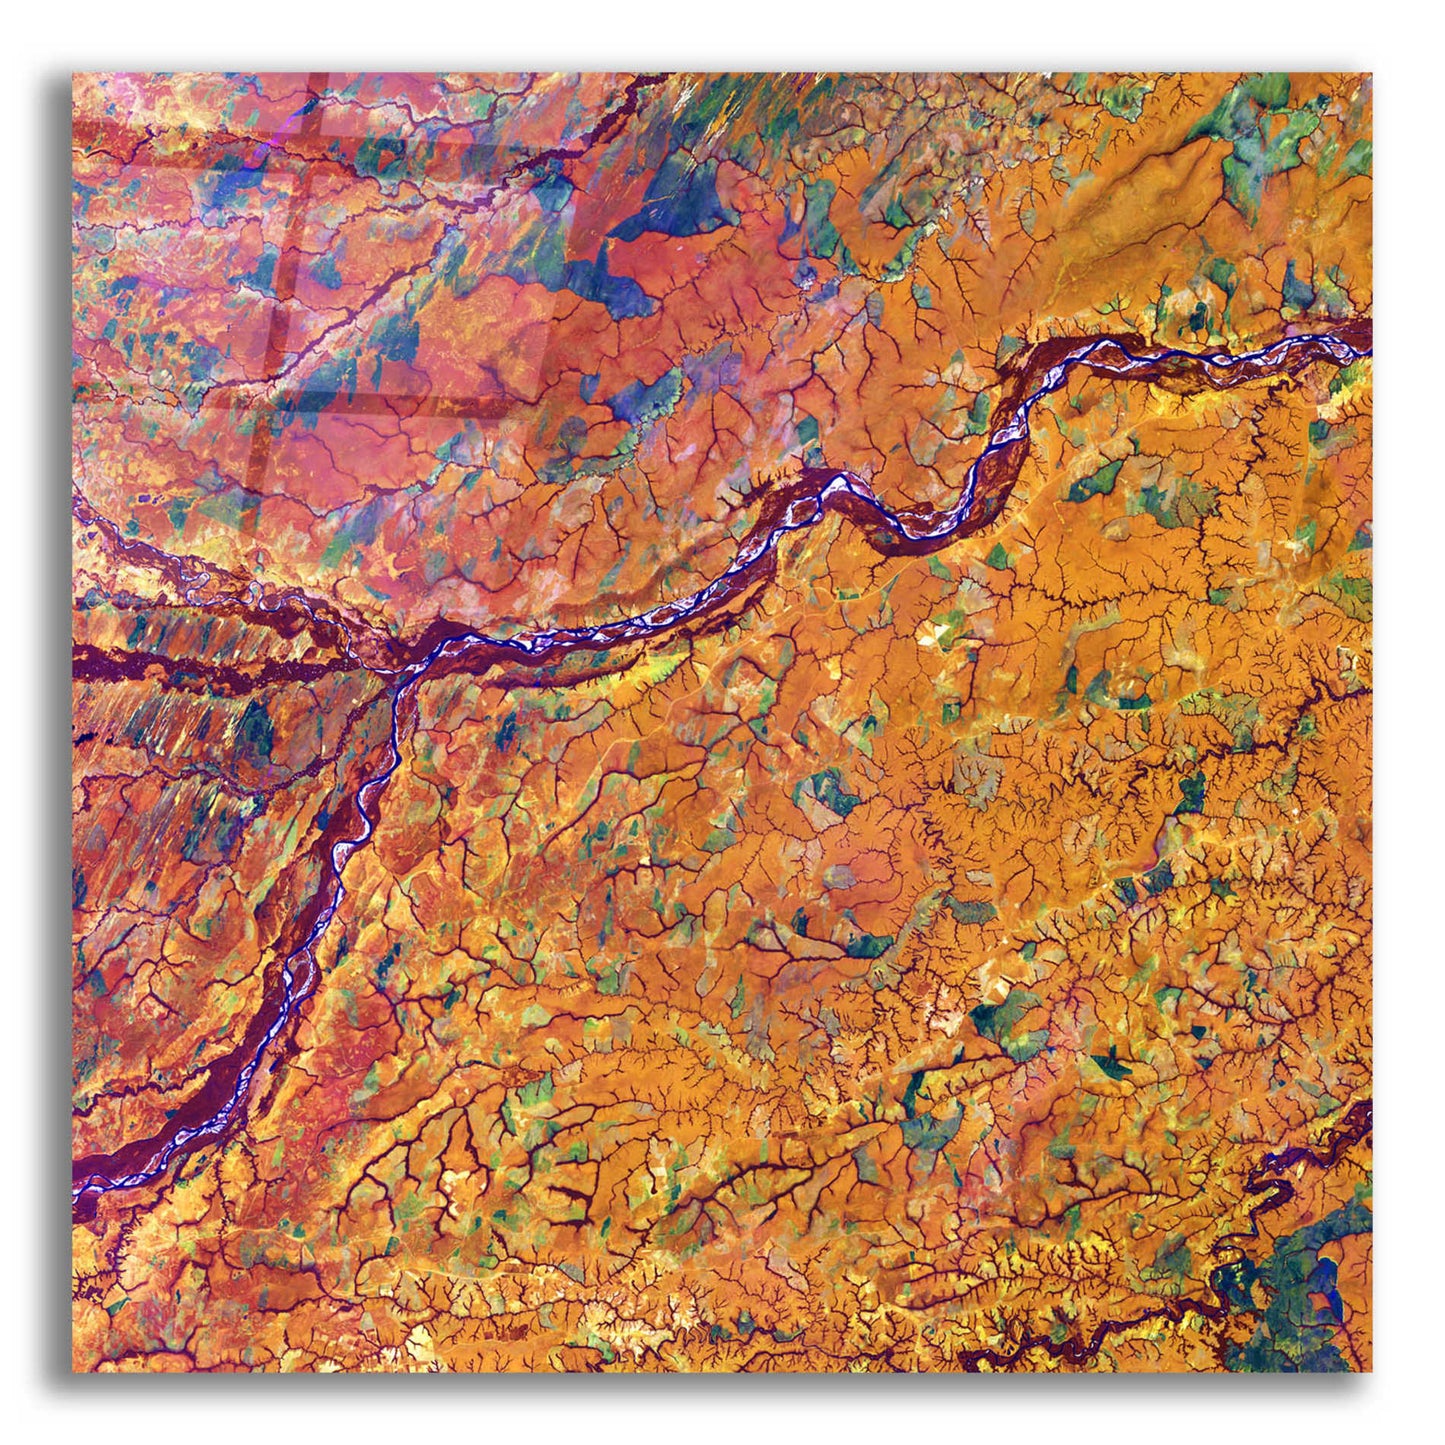 Epic Art 'Earth as Art: Capillaries,' Acrylic Glass Wall Art,12x12x1.1x0,18x18x1.1x0,26x26x1.74x0,37x37x1.74x0